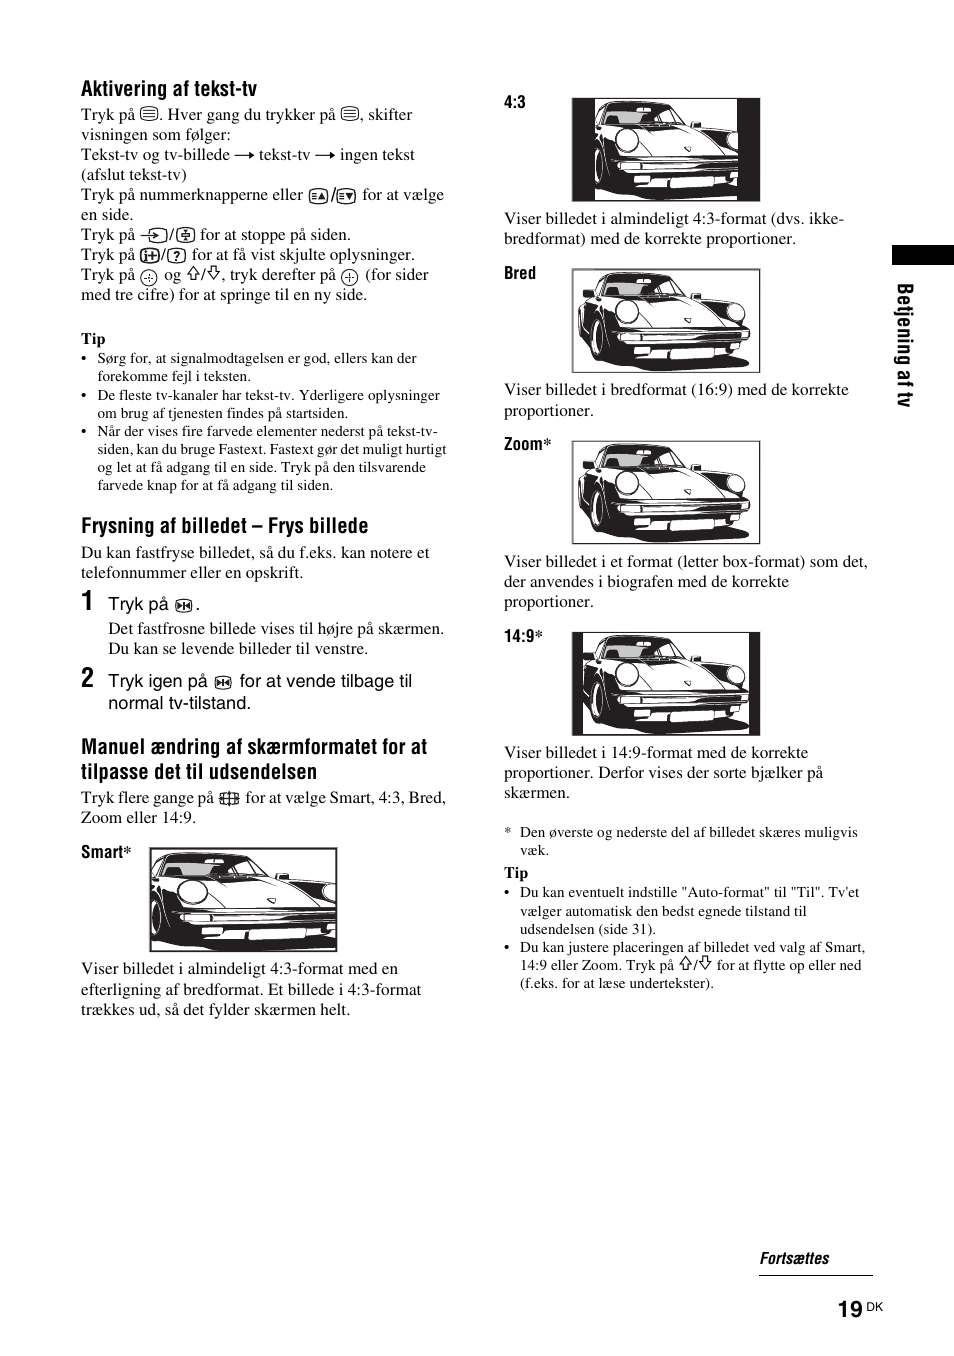 D (side 19), E (side 19), Side 19): vis | Side 19, V (side 19), Side 19) | Sony KDS-55A2000 Manuale d'uso | Pagina 19 / 232